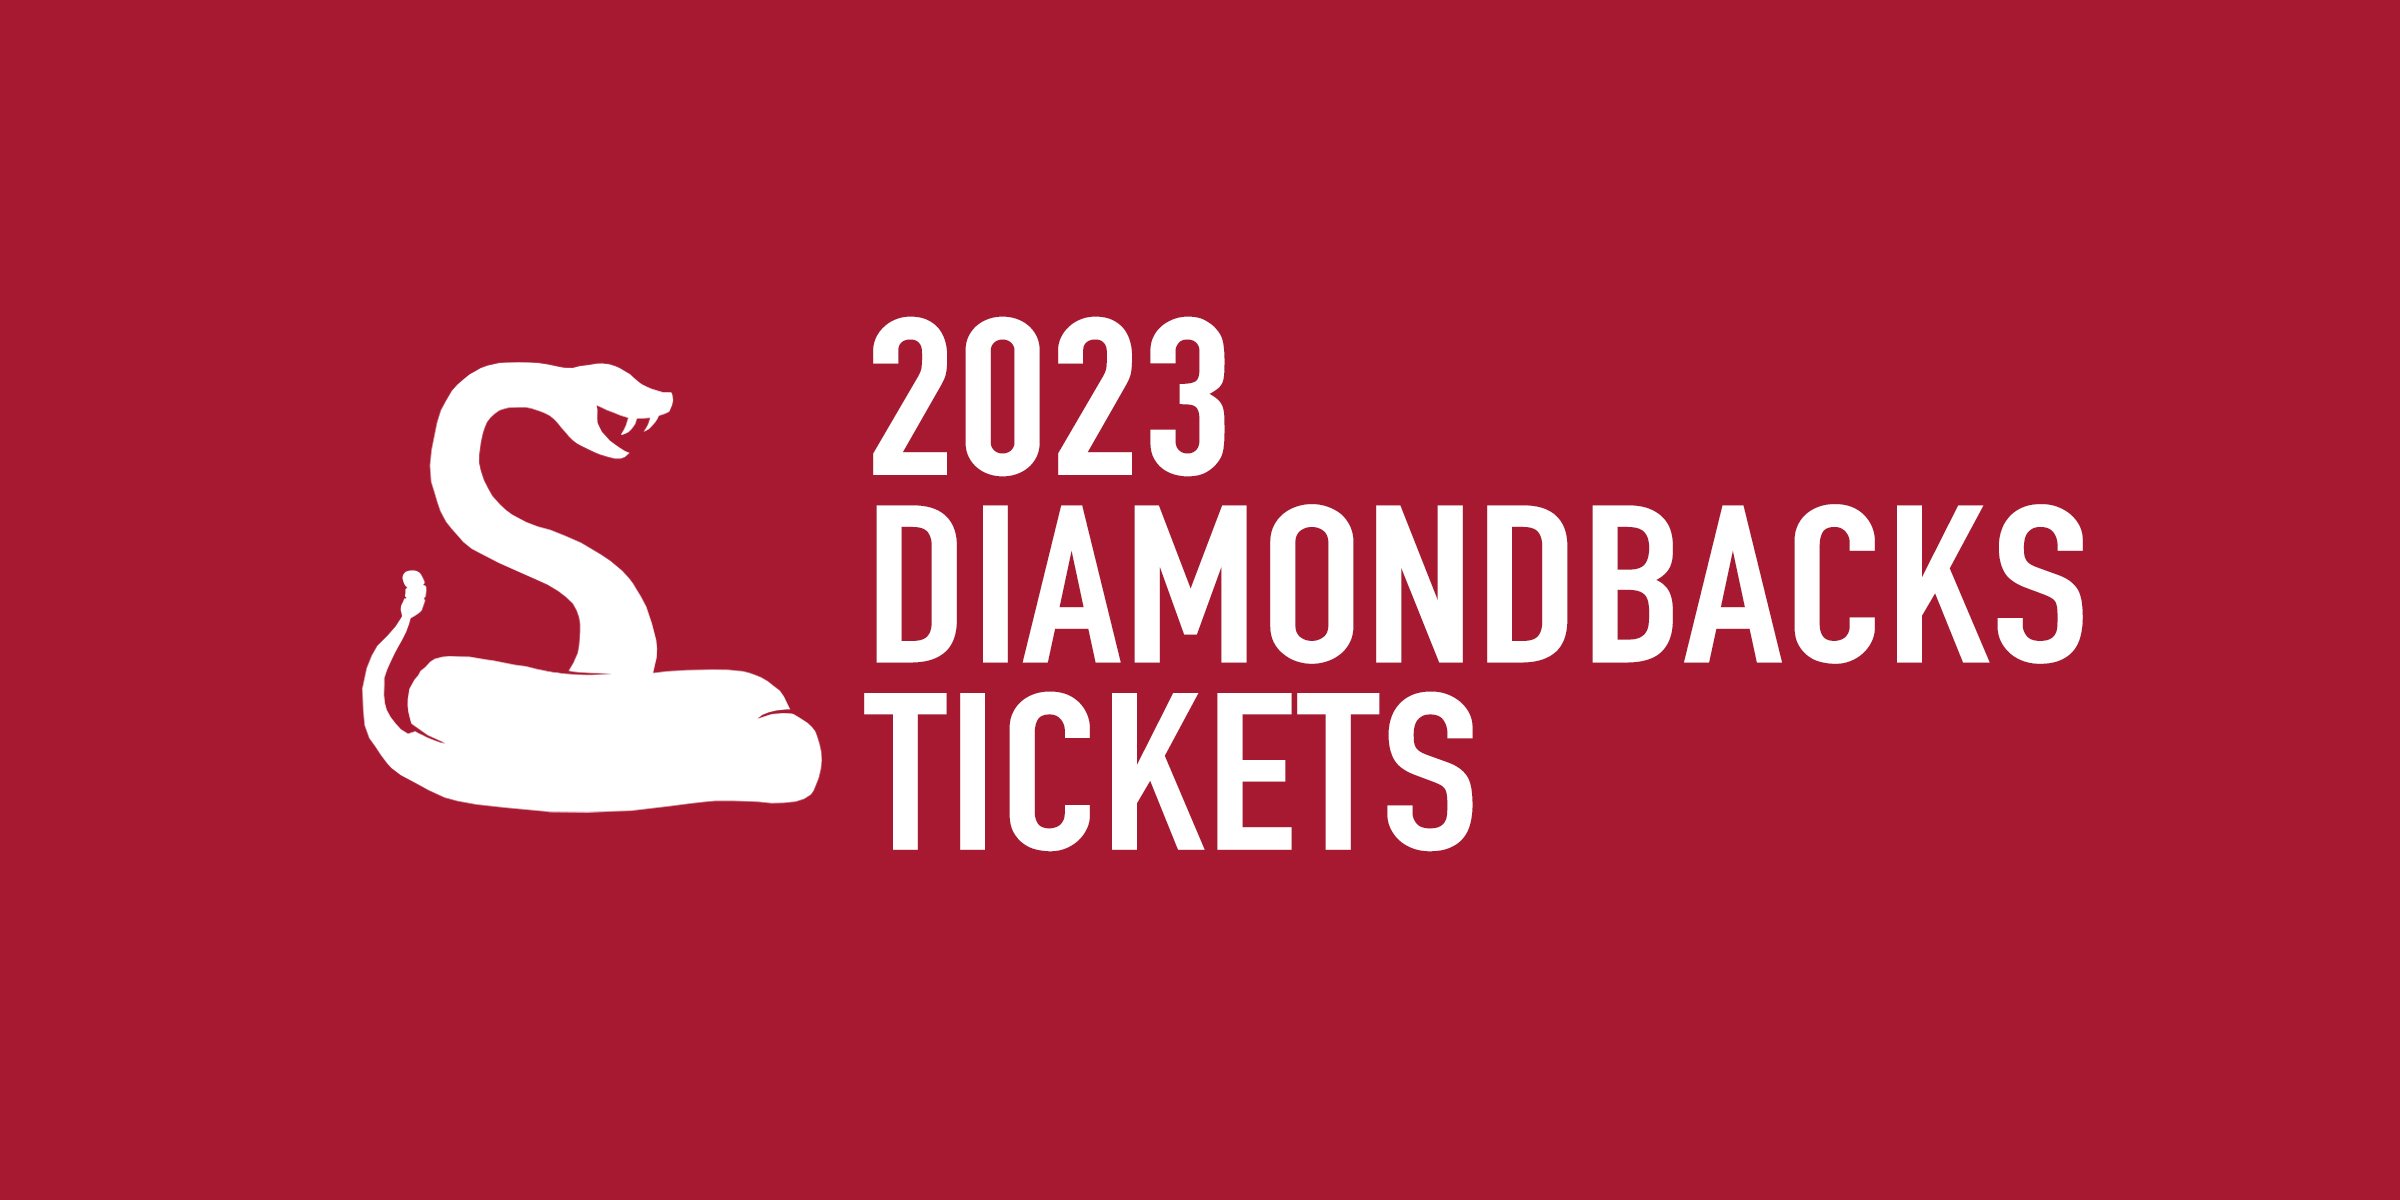 Arizona Diamondbacks giveaways and promotions schedule for 2022